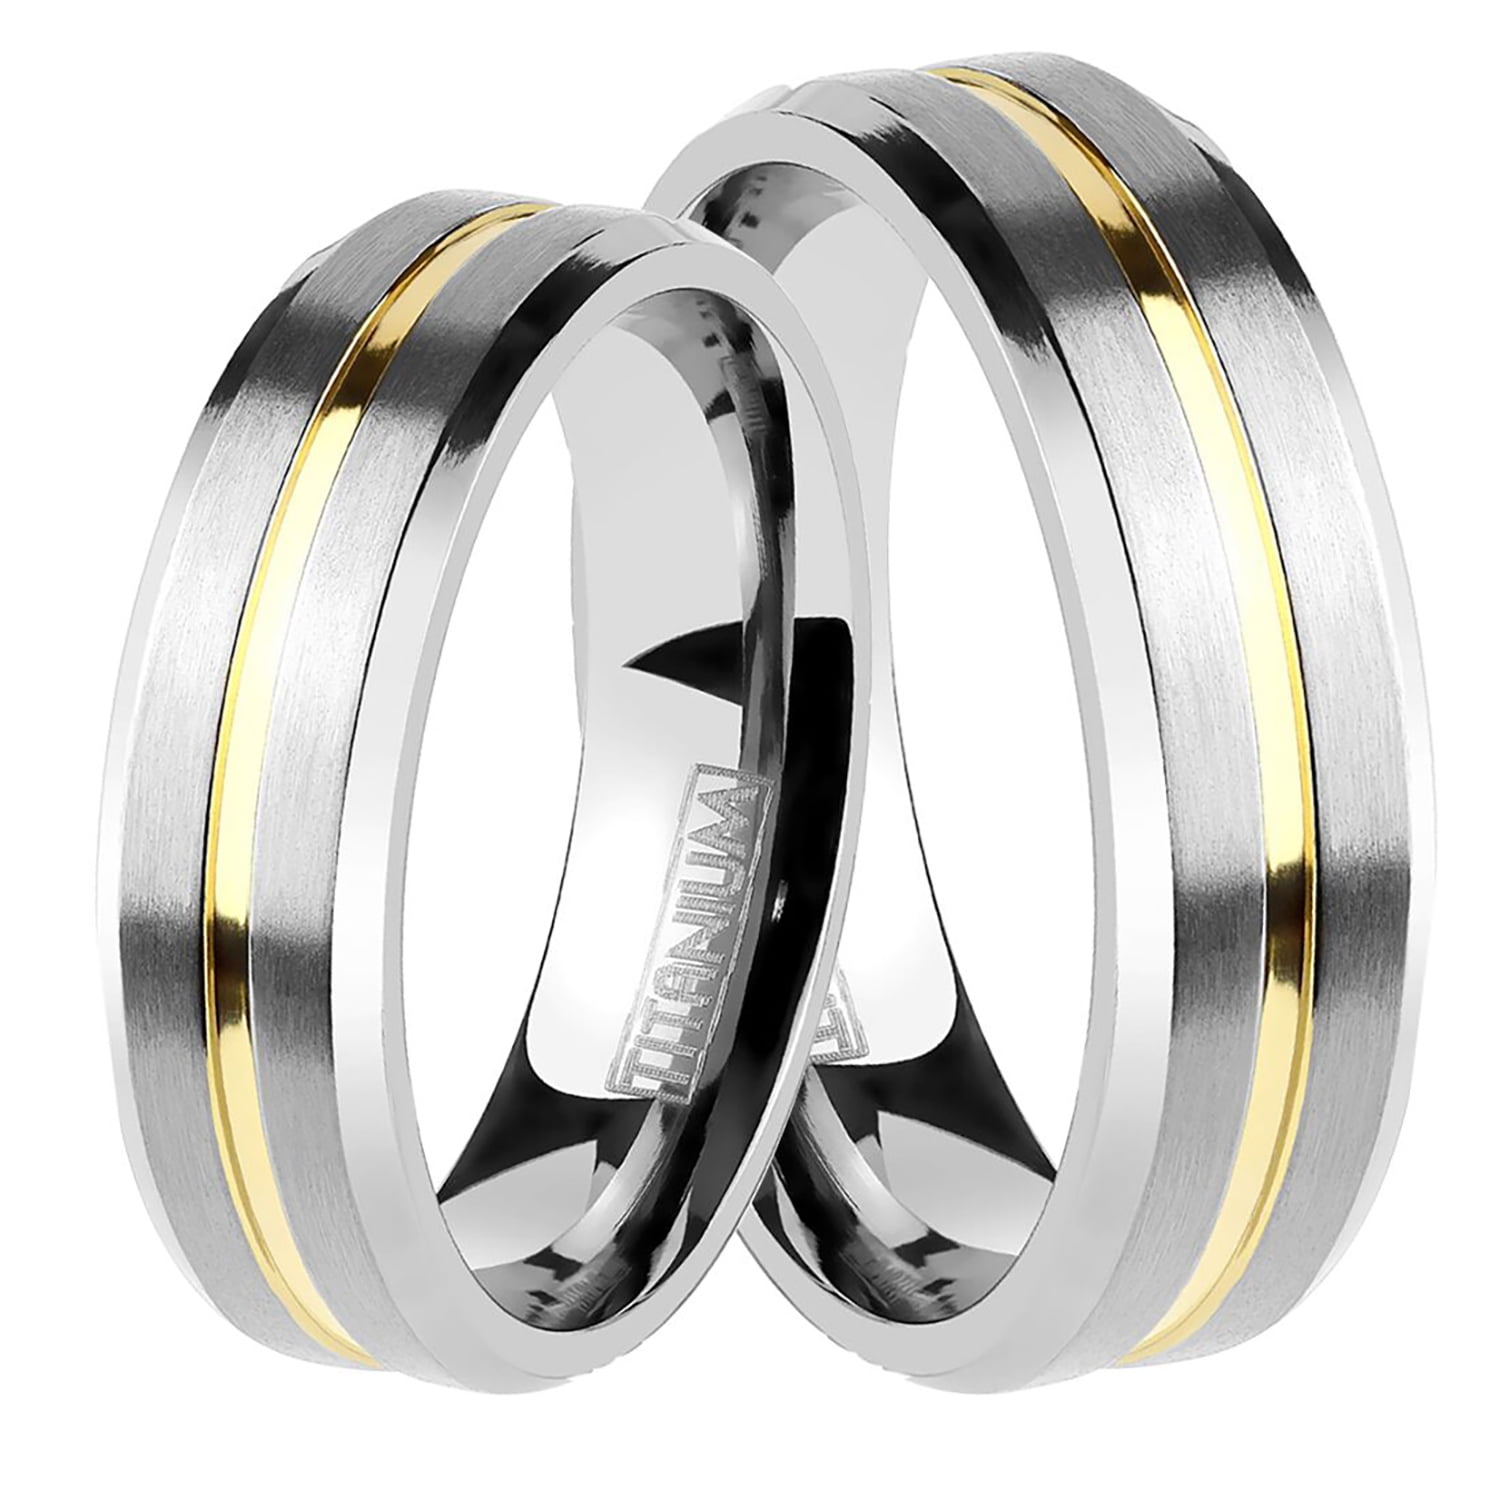 Size8-11 Men's Black Titanium Steel Ring 8MM Wedding Engagement Anniversary Band